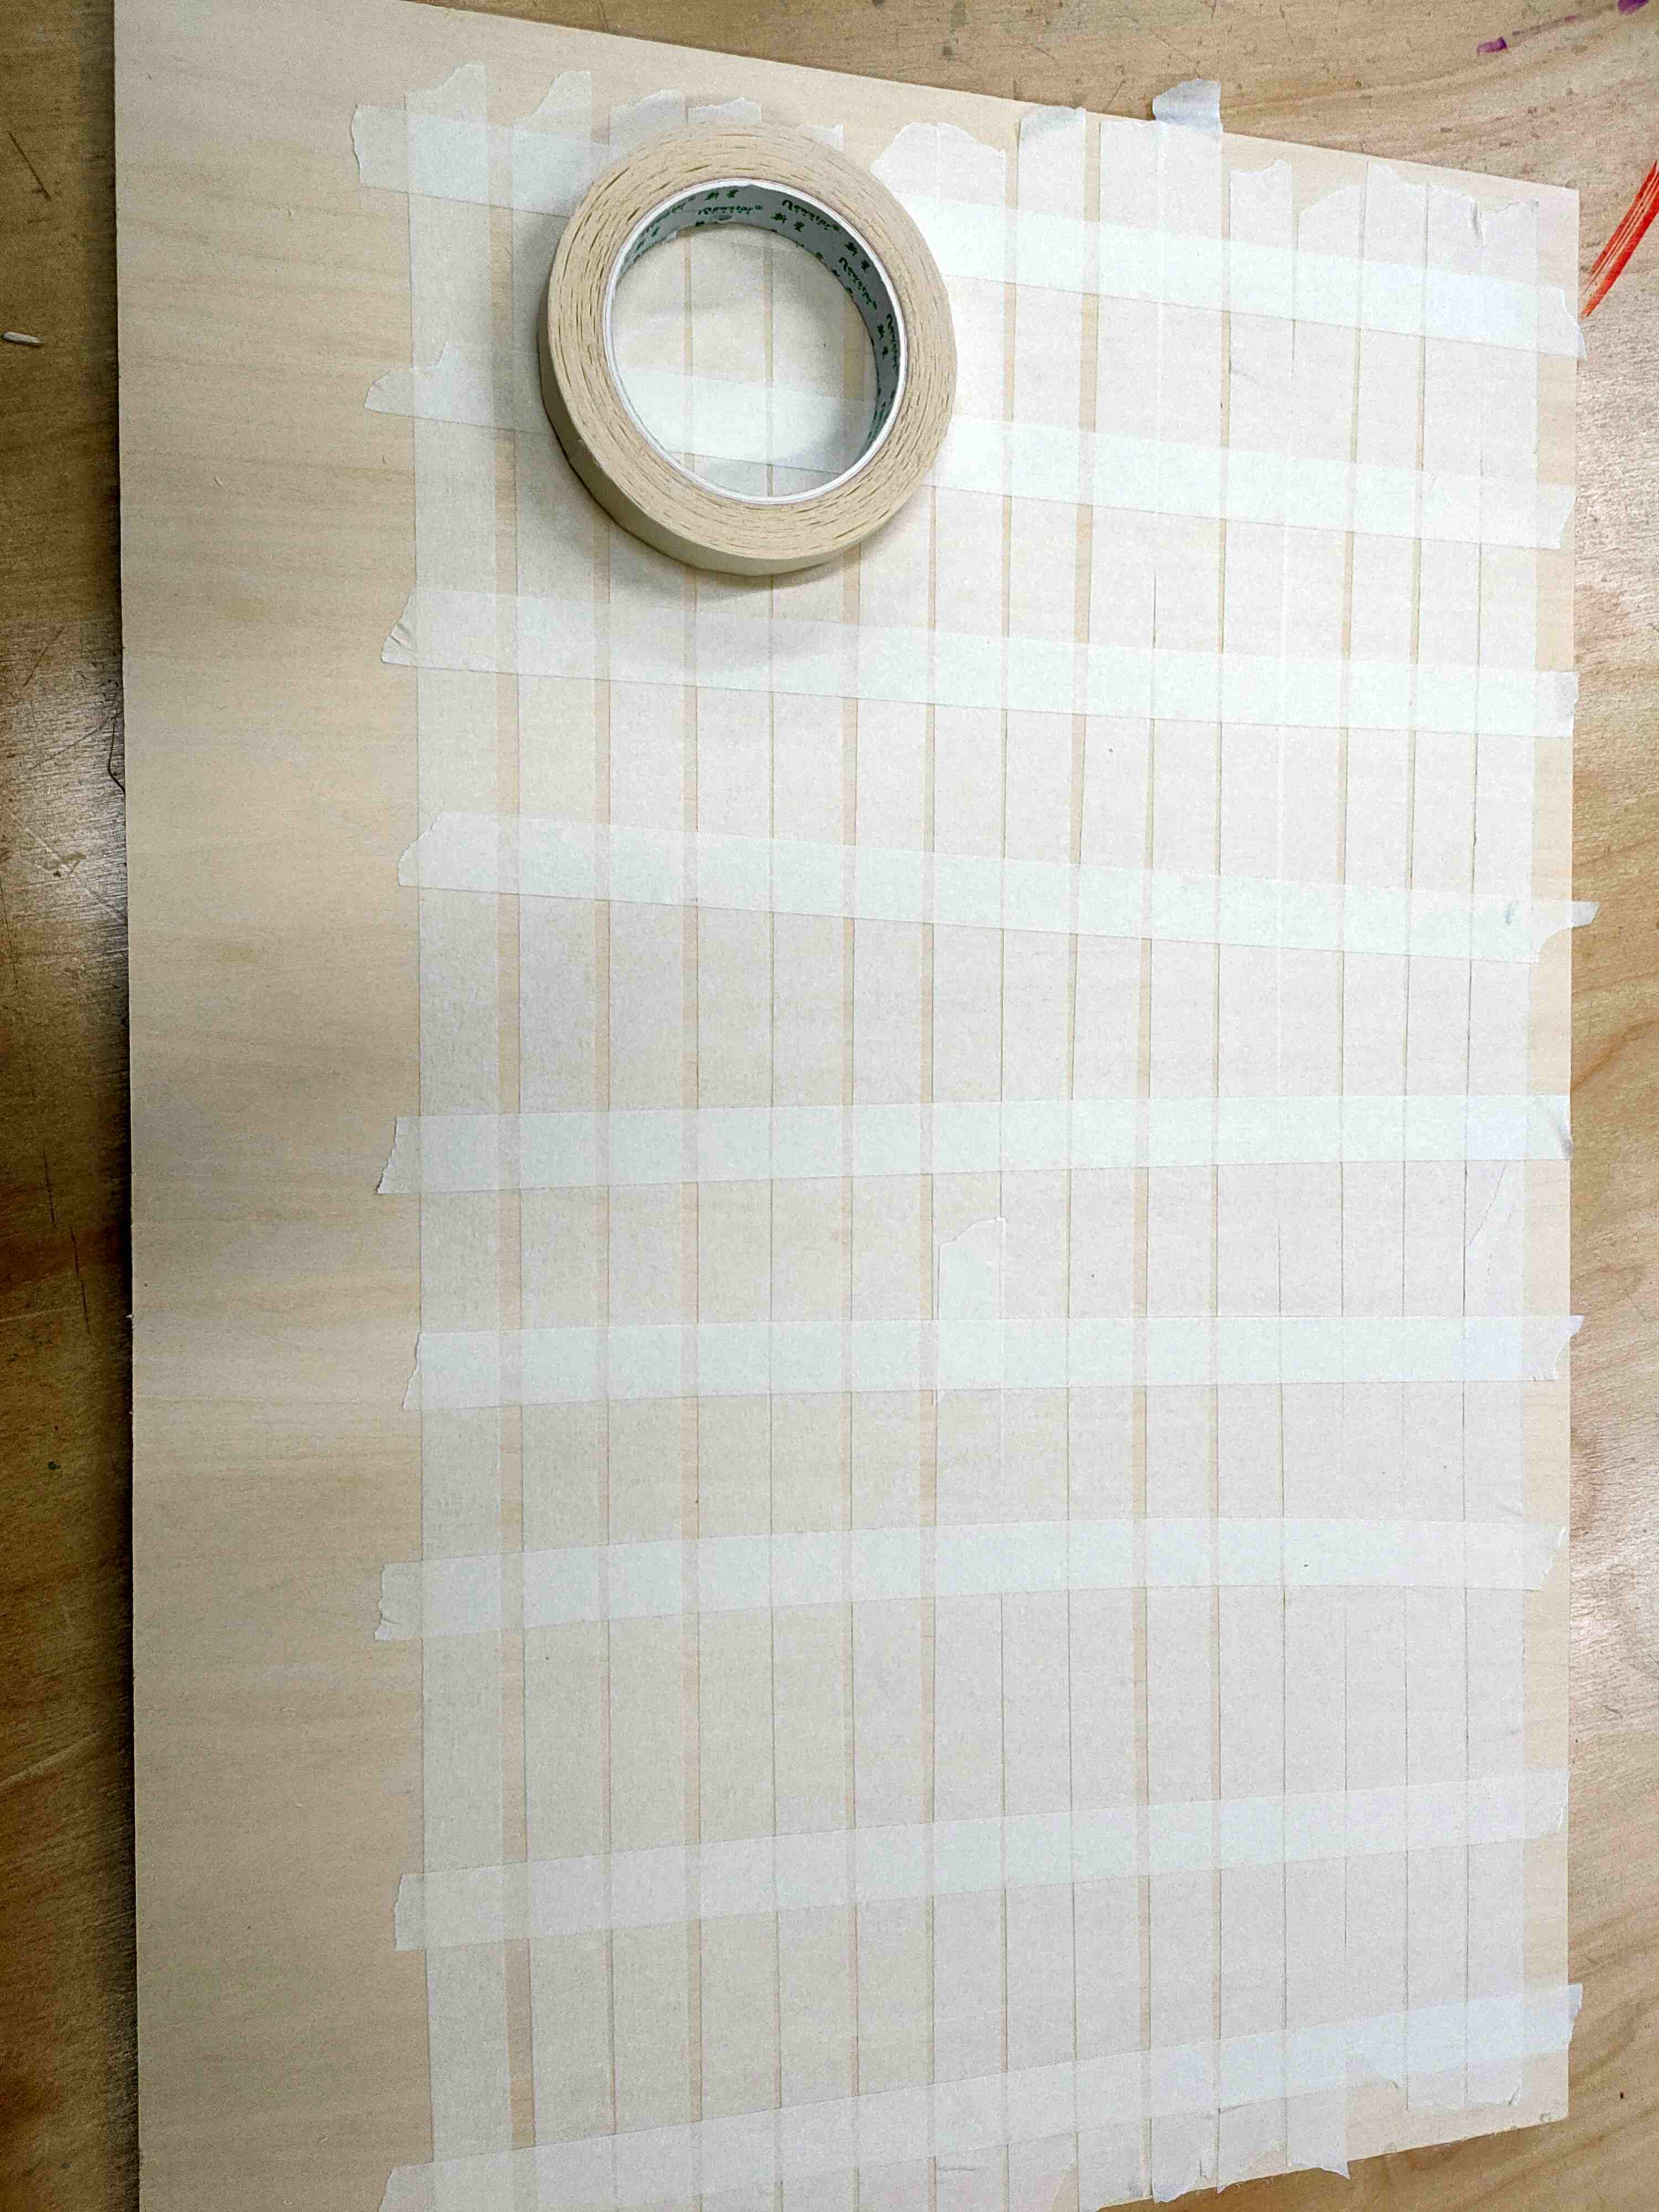 taped board